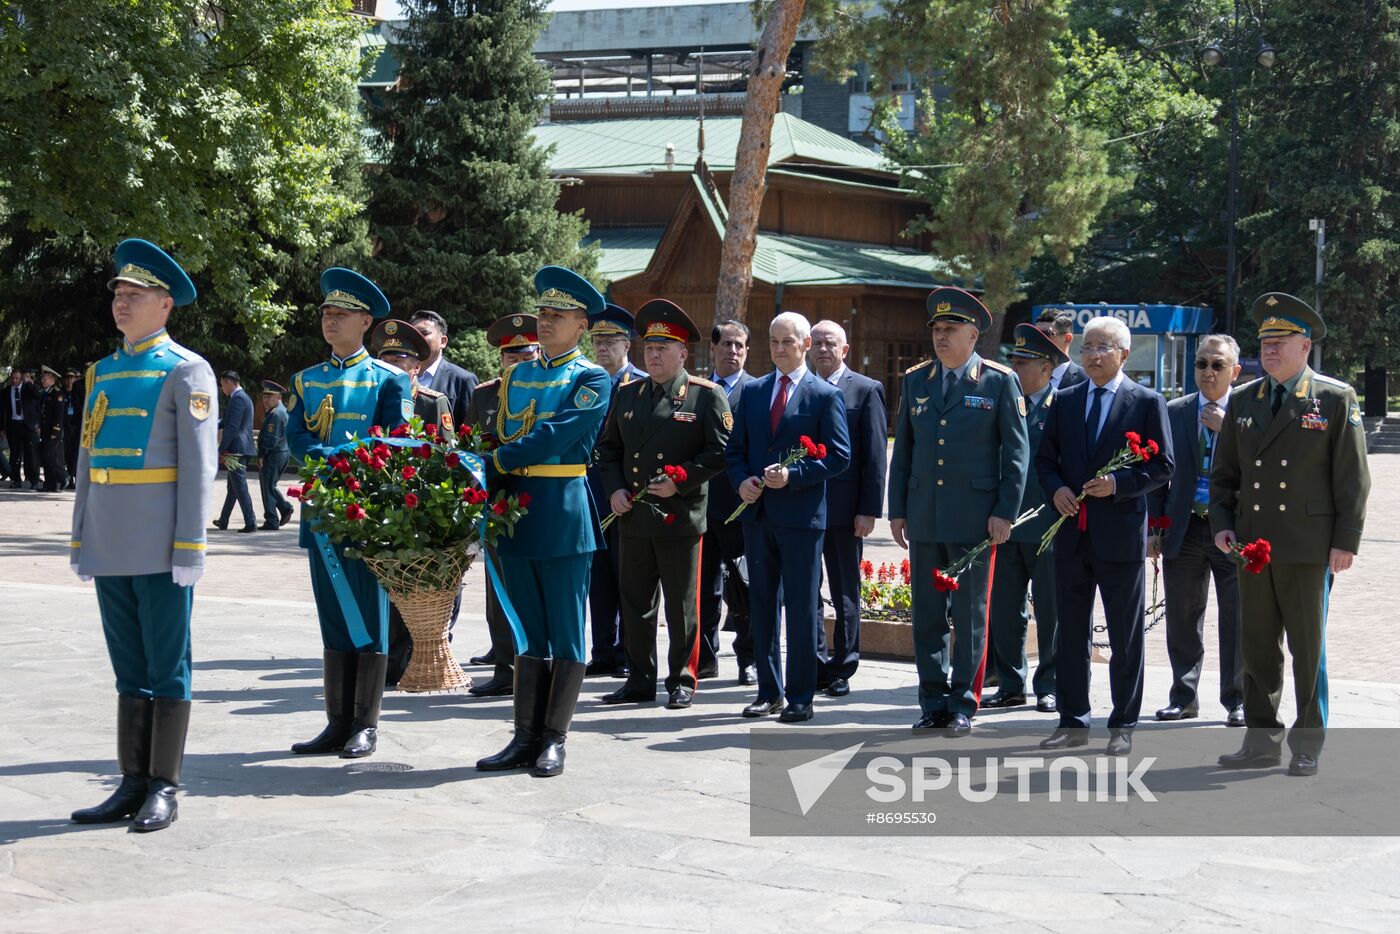 Kazakhstan CSTO Defence Ministers Summit